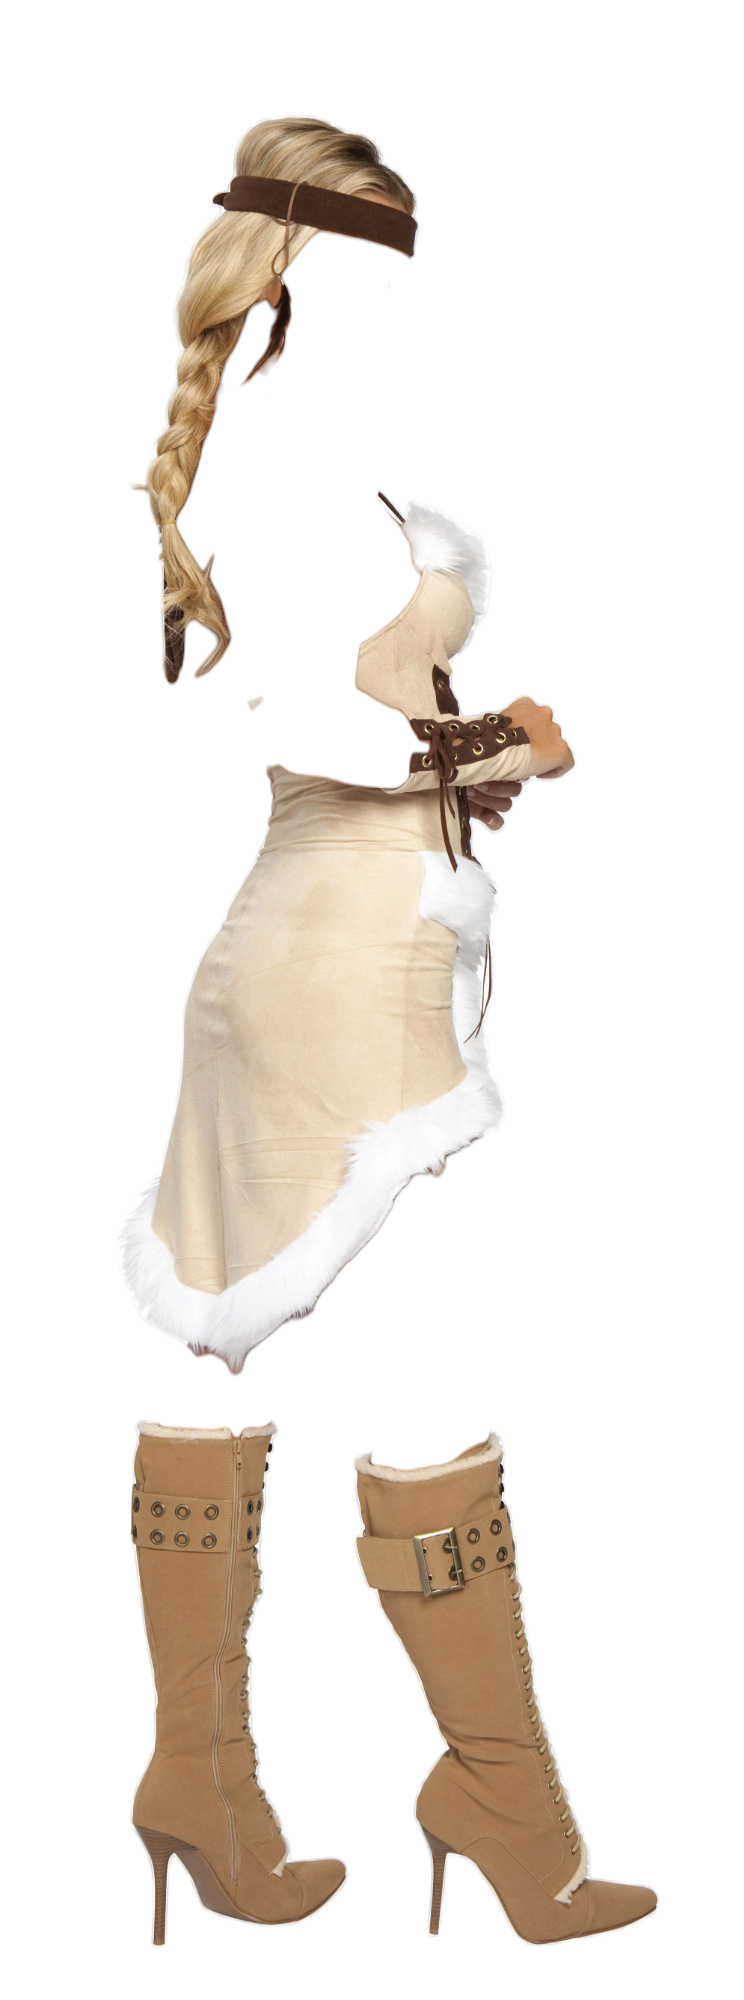 Roma Costume 3 PC Indian Maiden Costume White